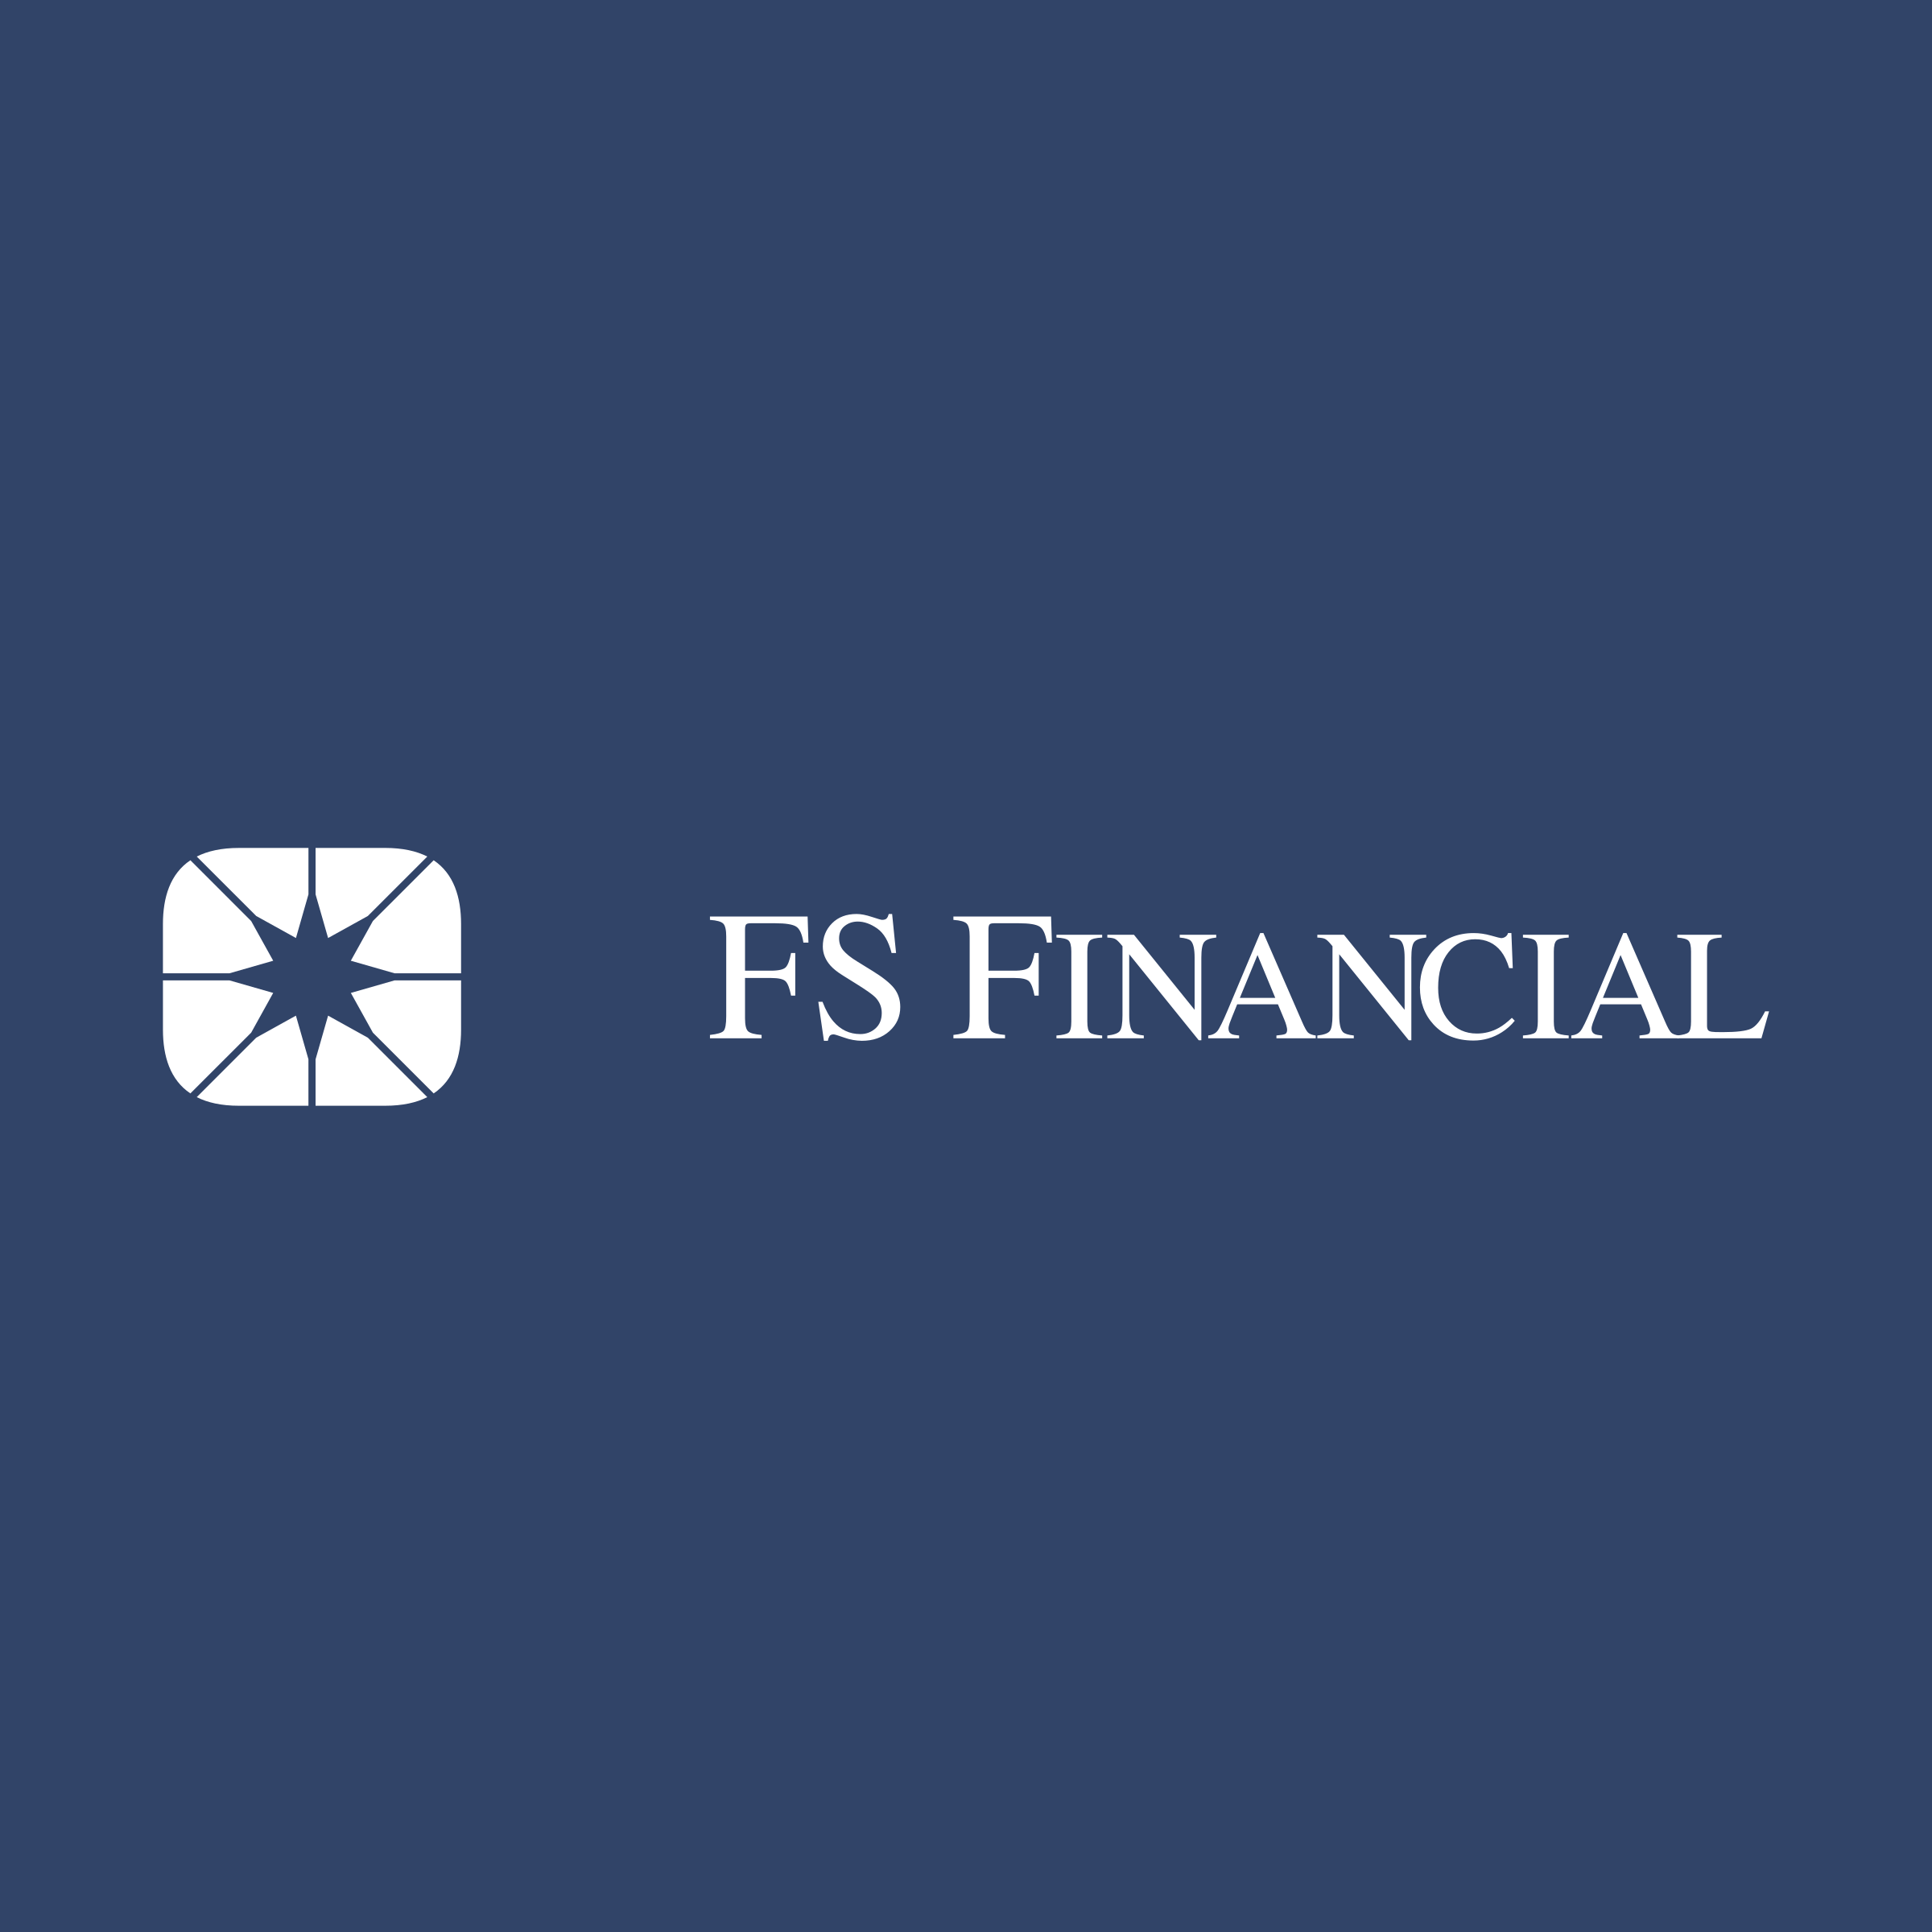 WFS Logo - WFS Financial Logo PNG Transparent & SVG Vector - Freebie Supply